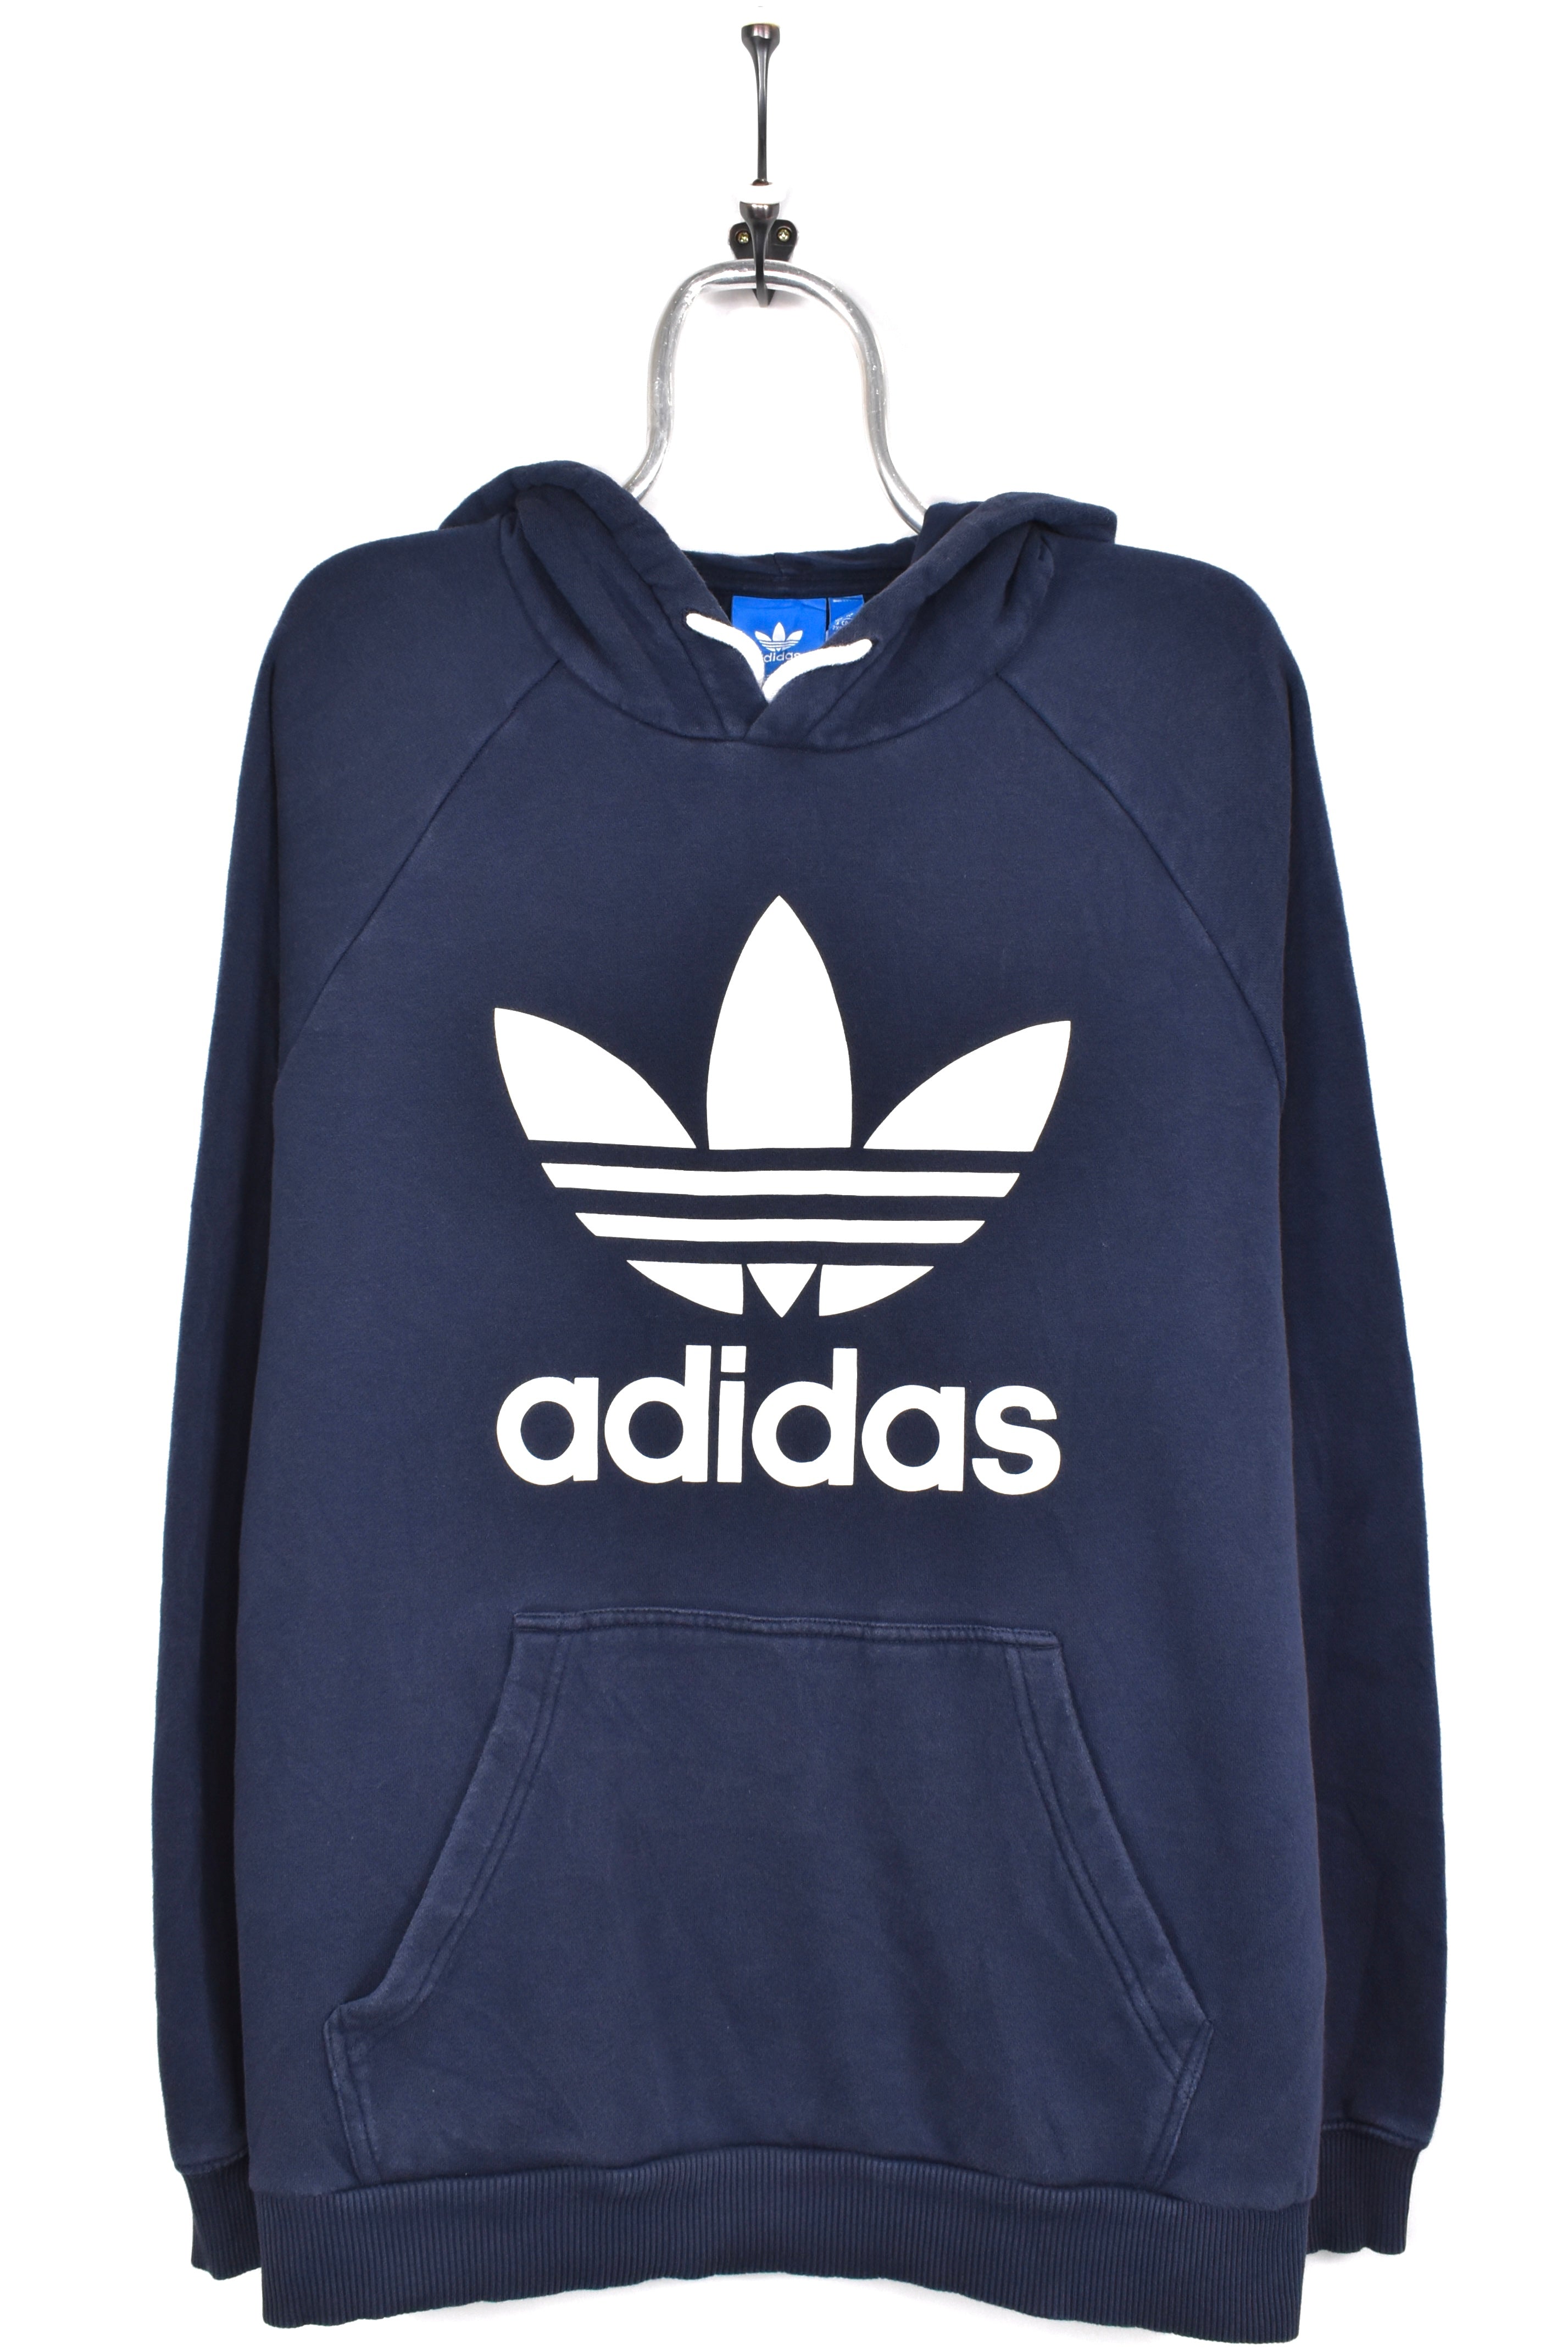 Modern Adidas hoodie, navy blue graphic sweatshirt - AU L ADIDAS